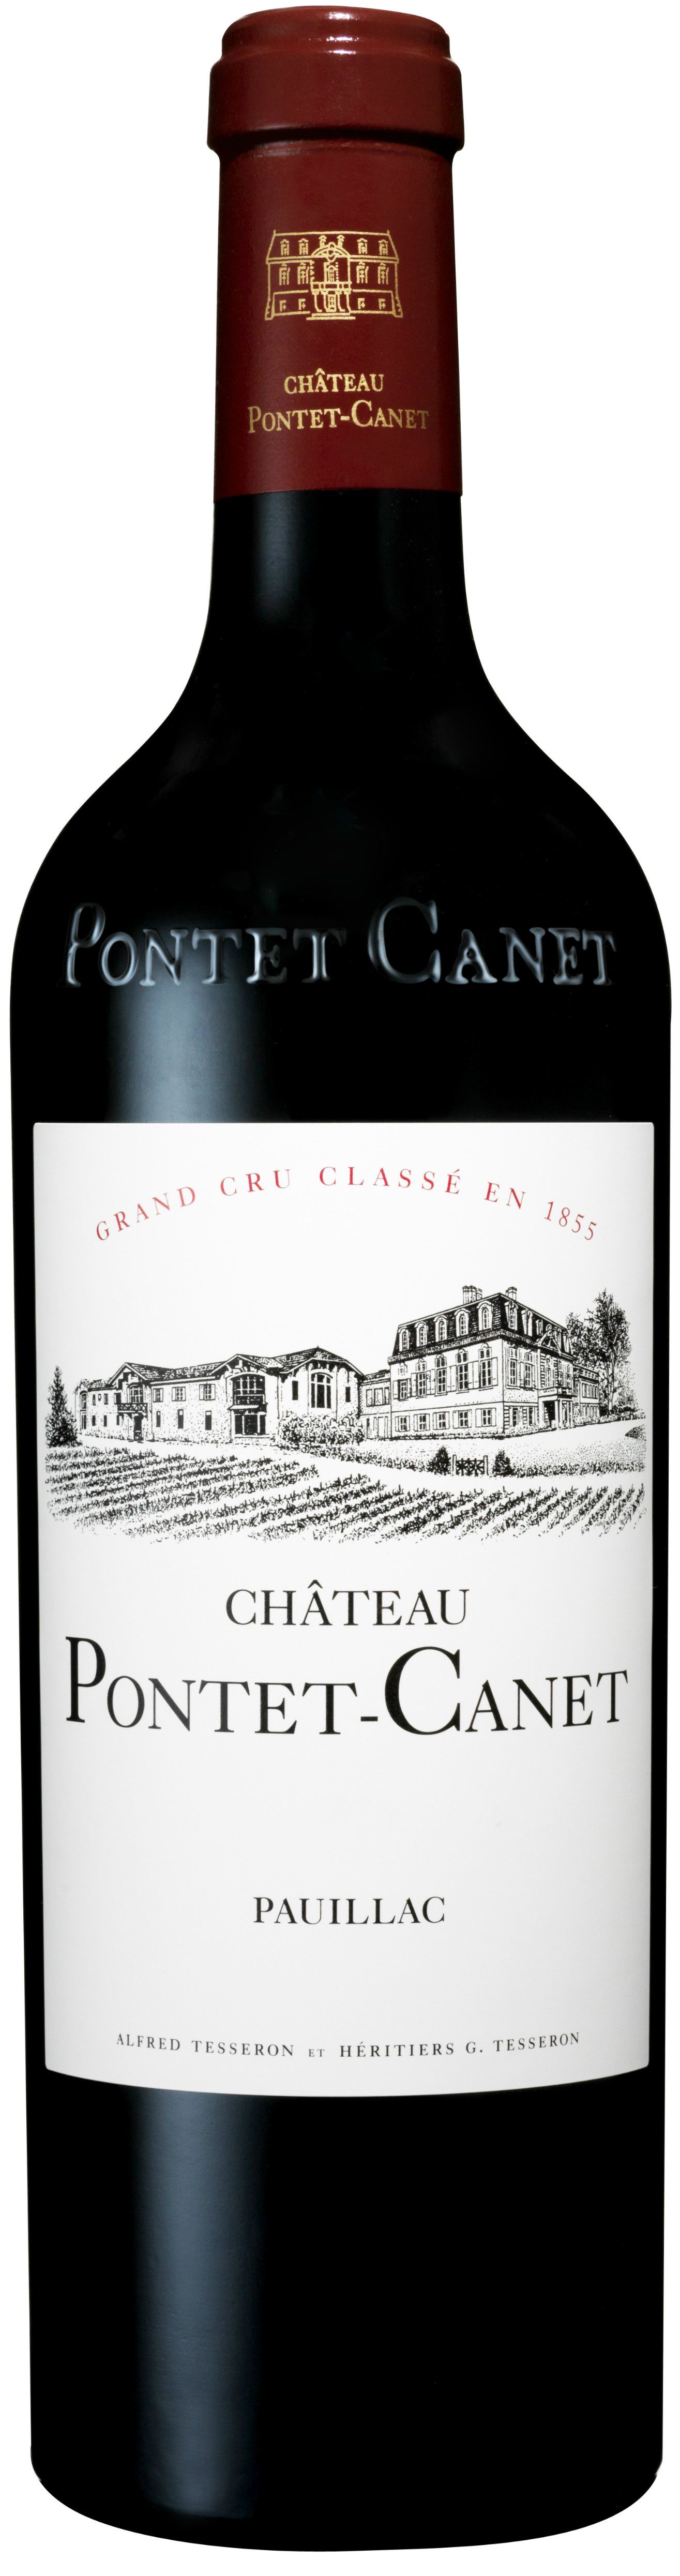 Chateau Pontet-Canet, 2008 (In 6-btls Box Set)